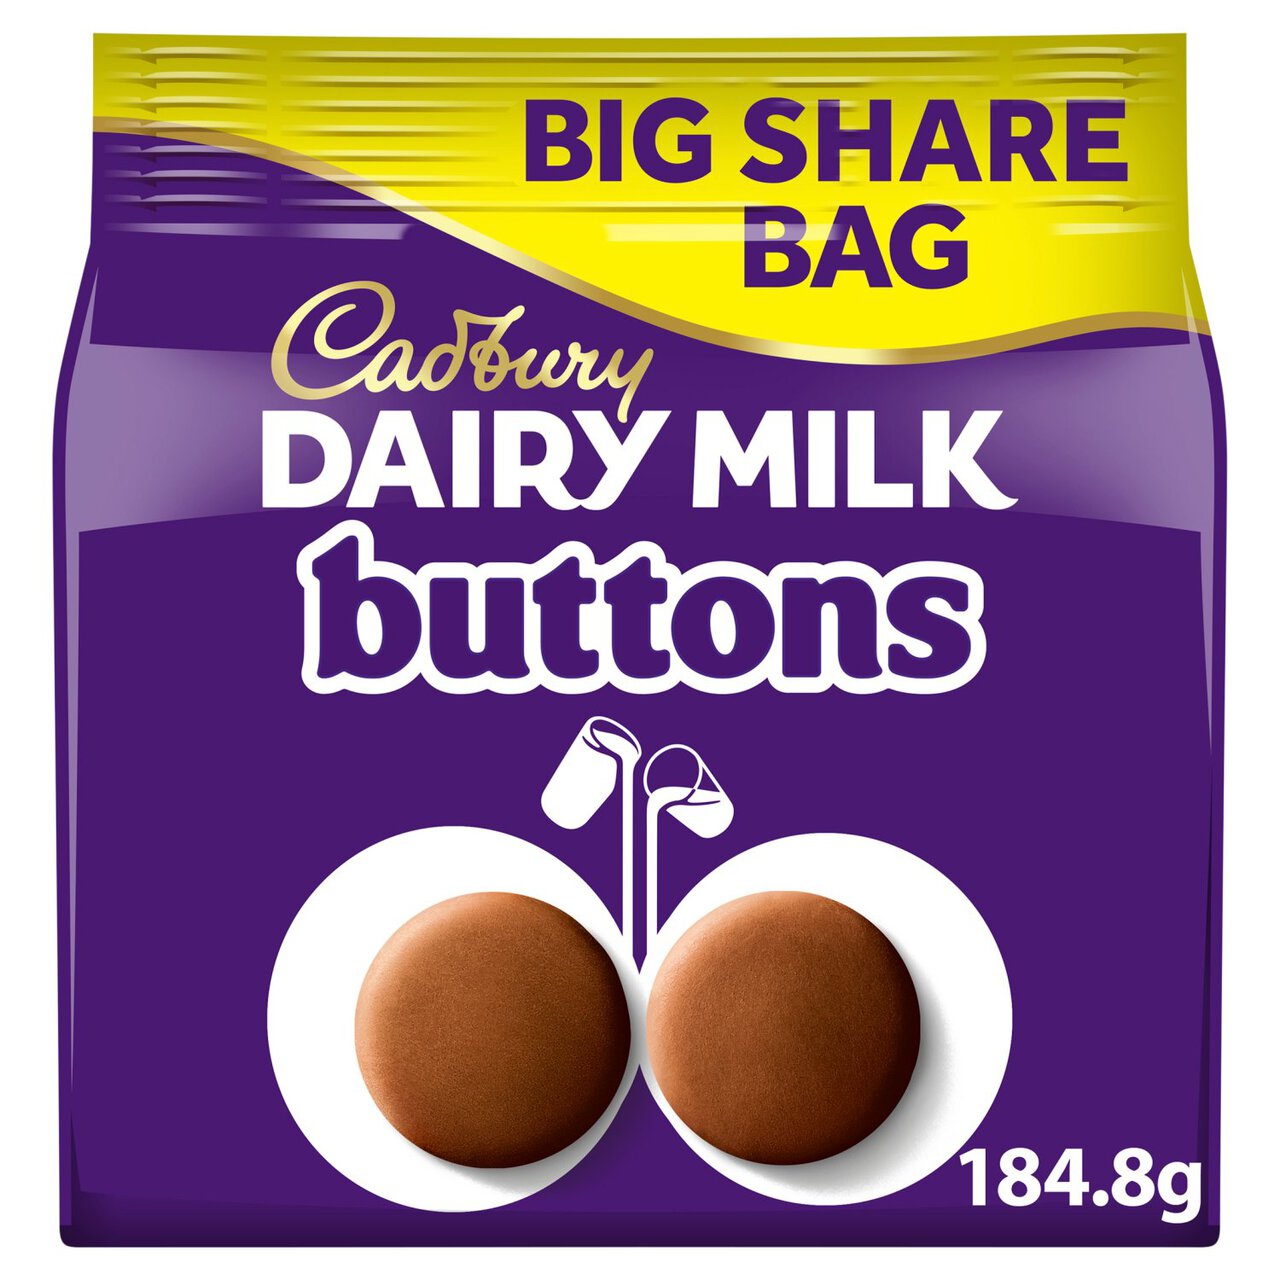 Cadbury Dairy Milk Giant Buttons Chocolate Big Share Bag 184.8g